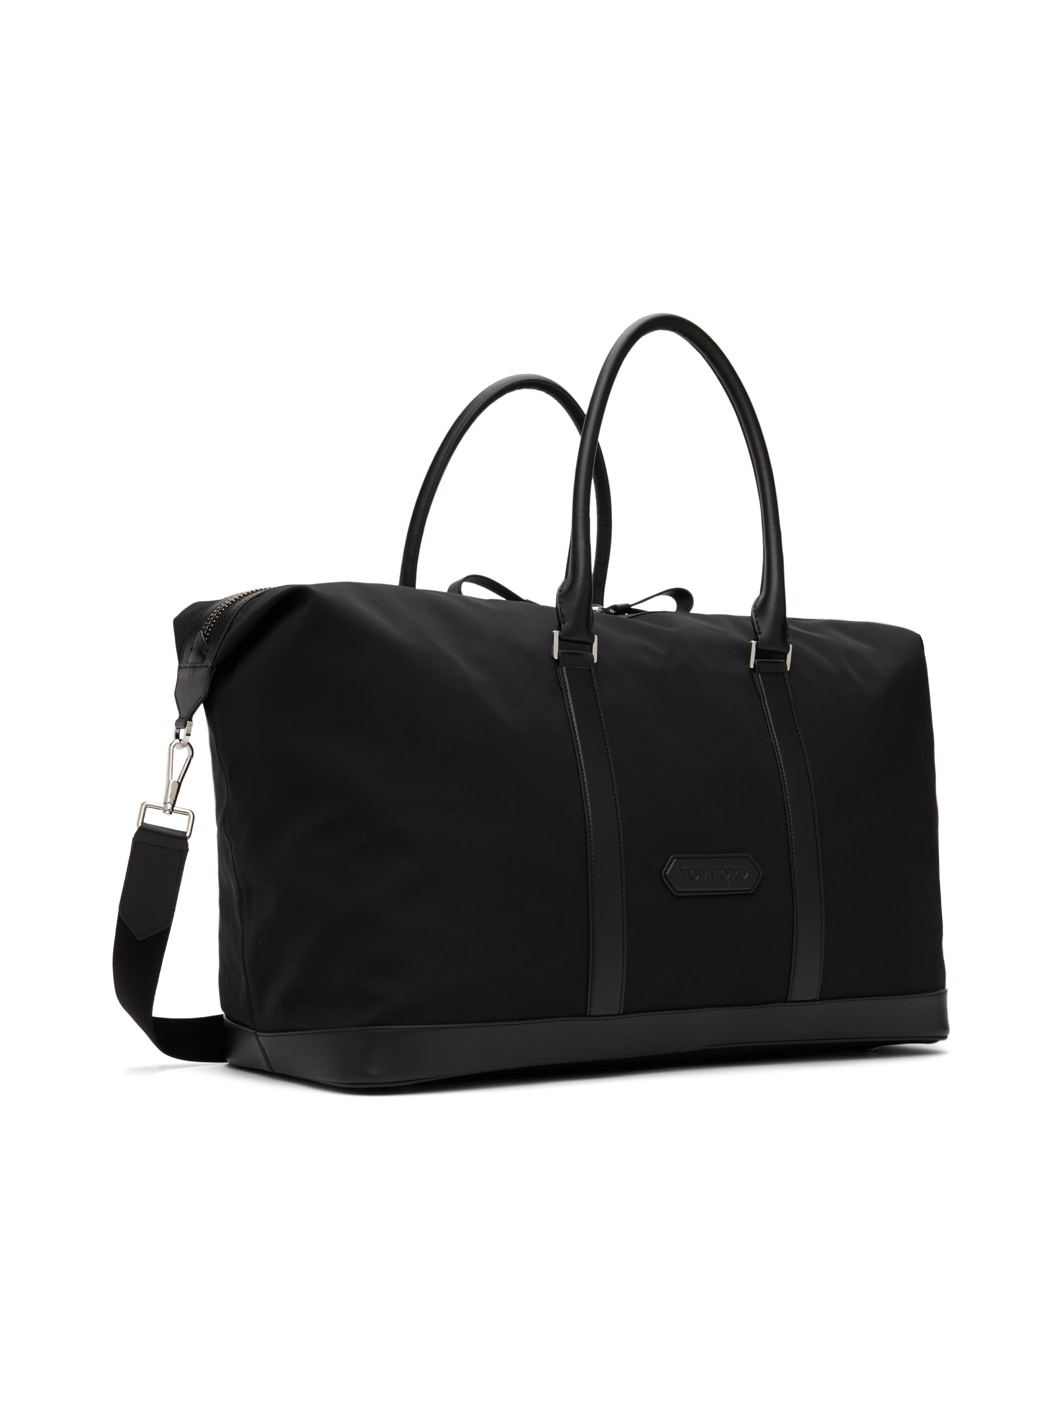 Black Holdall Duffle Bag - 2